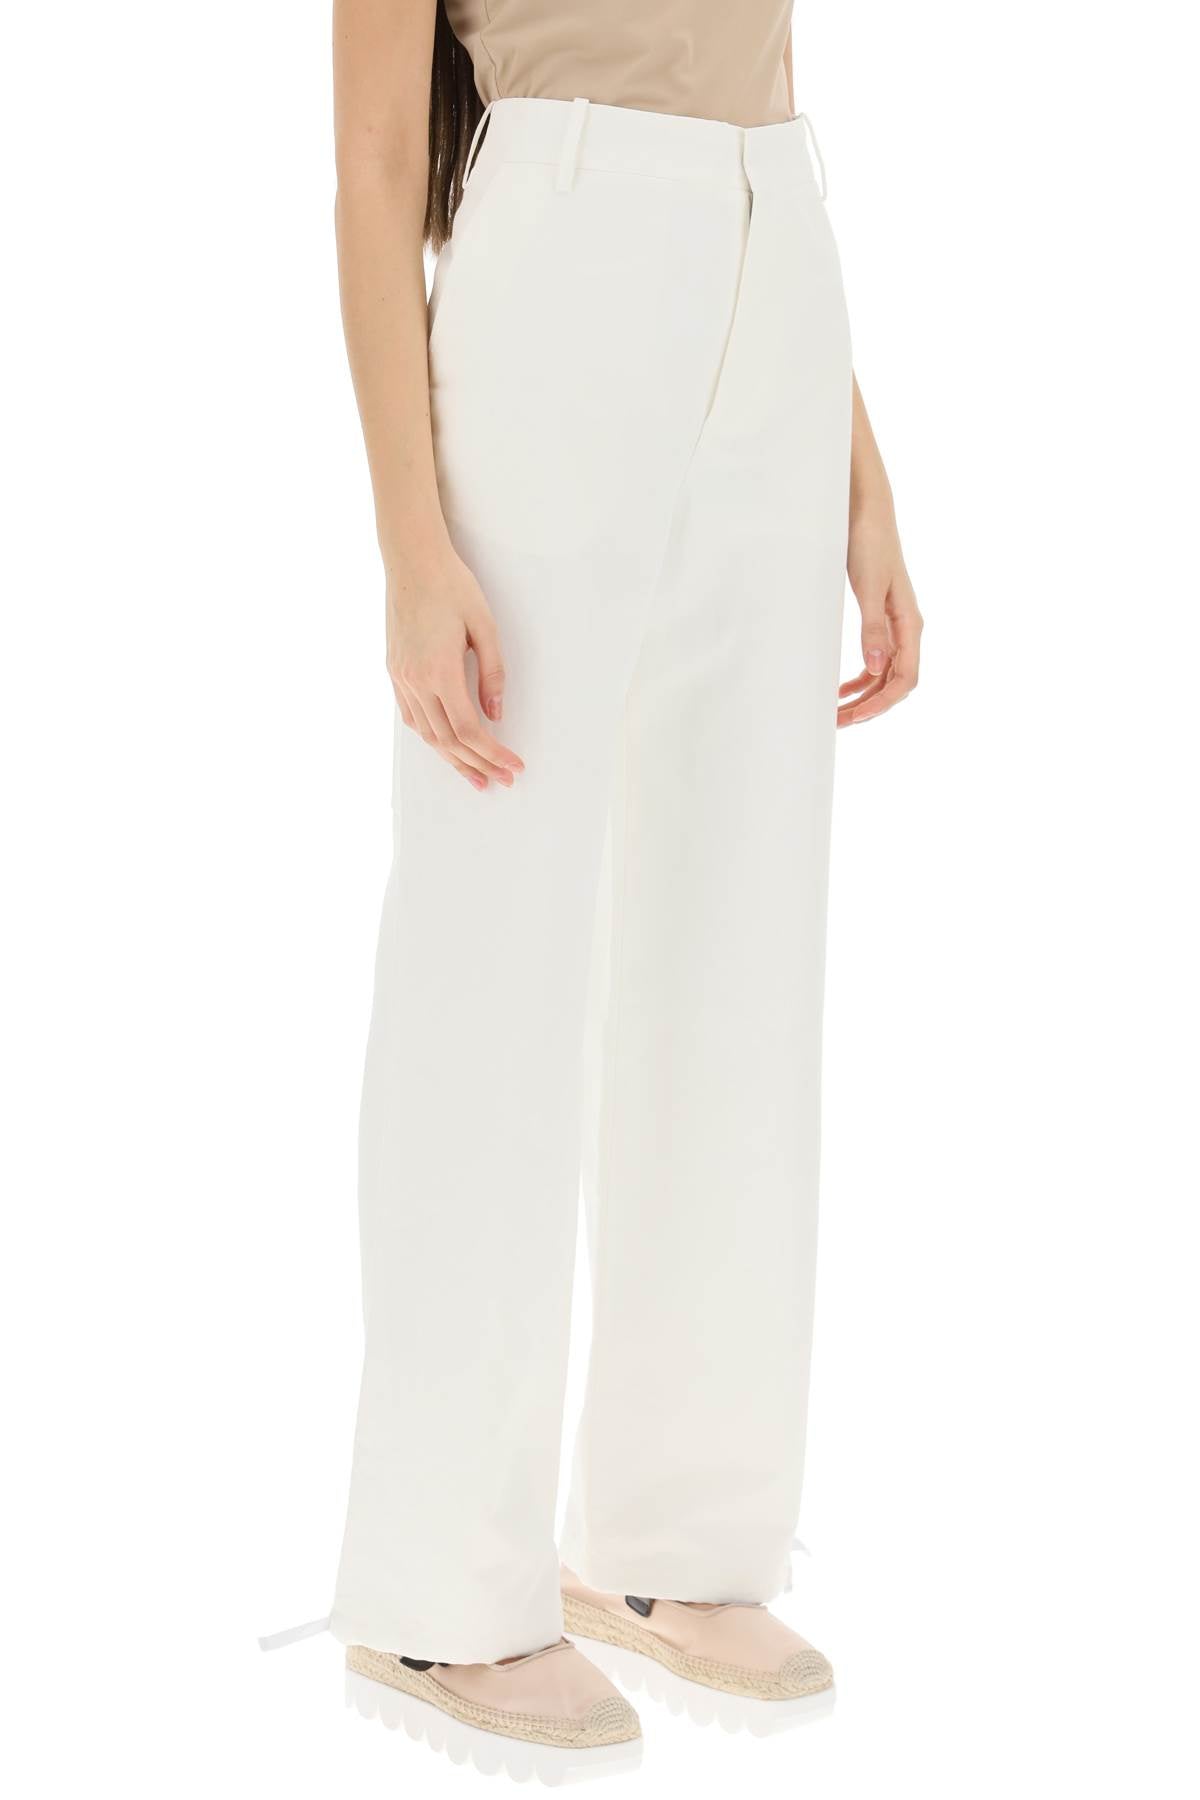 Shop Marni Technical Linen Utility Pants Women In White